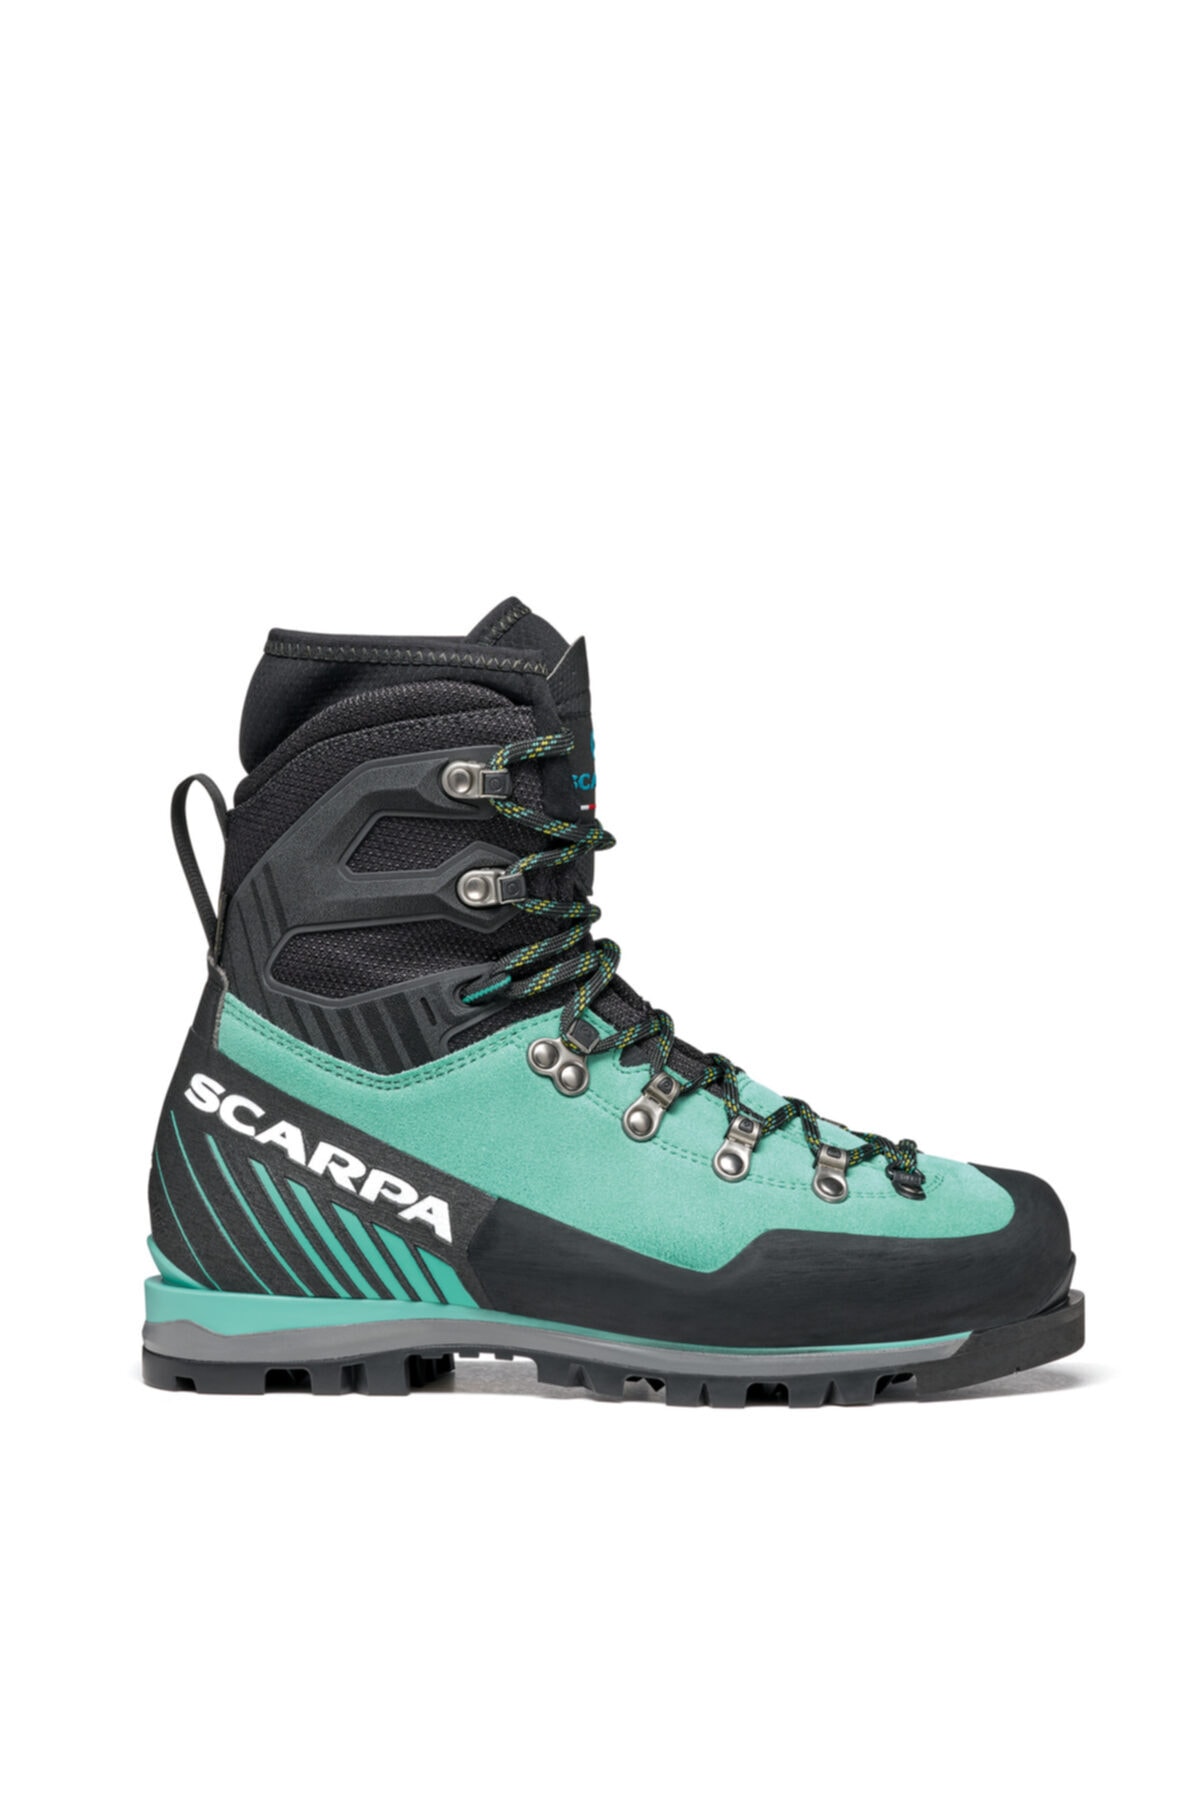 کفش کوهنوردی زنانه Scarpa مدل Mont Blanc Pro Gtx کد 87520.202